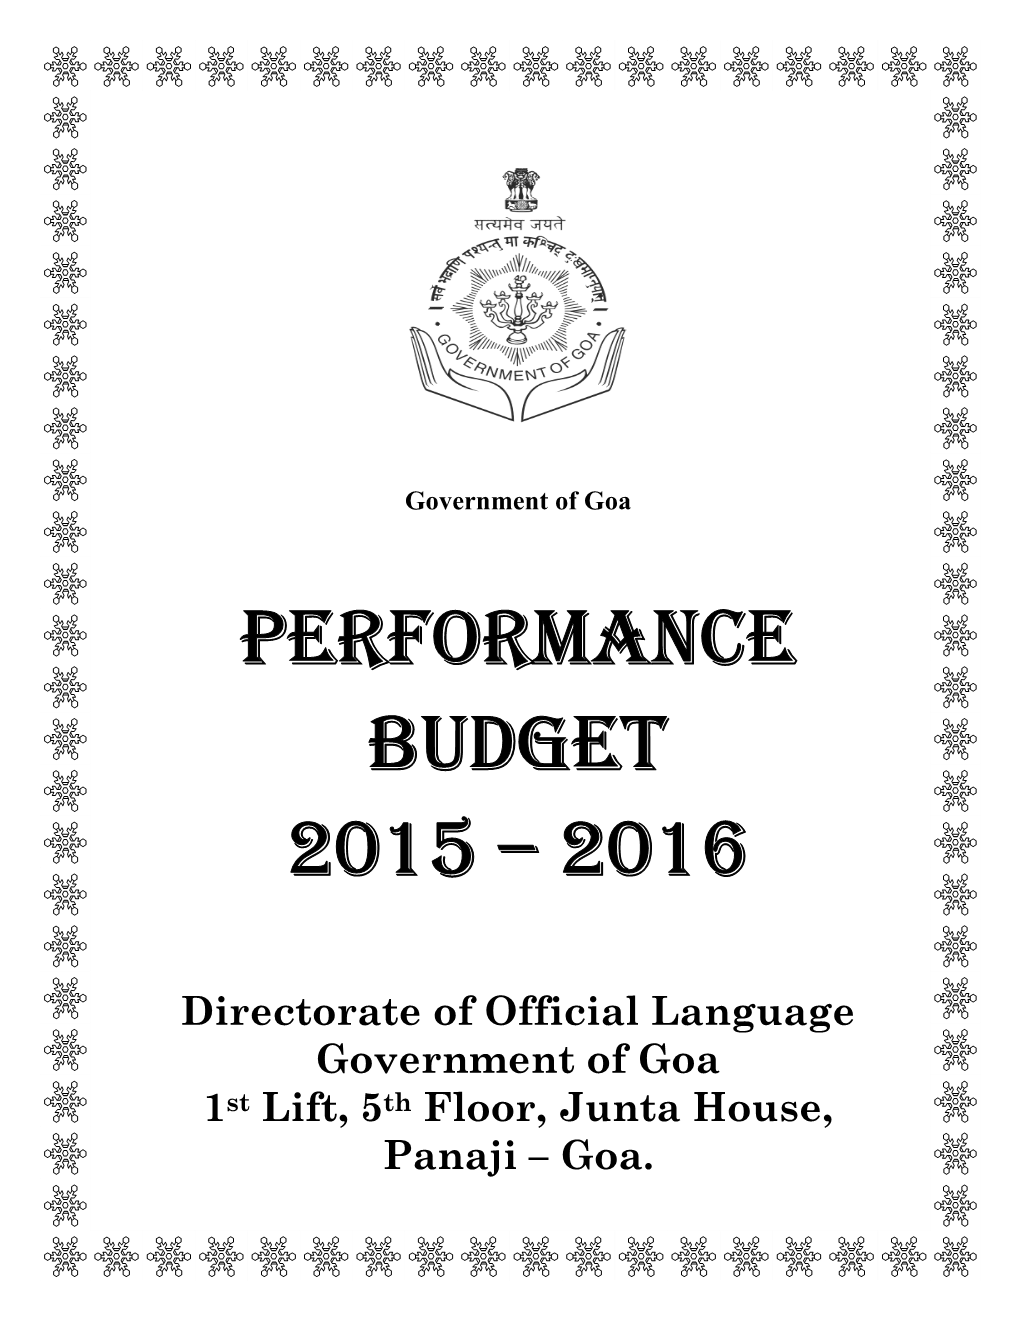 Performance Budget 2015 – 2016